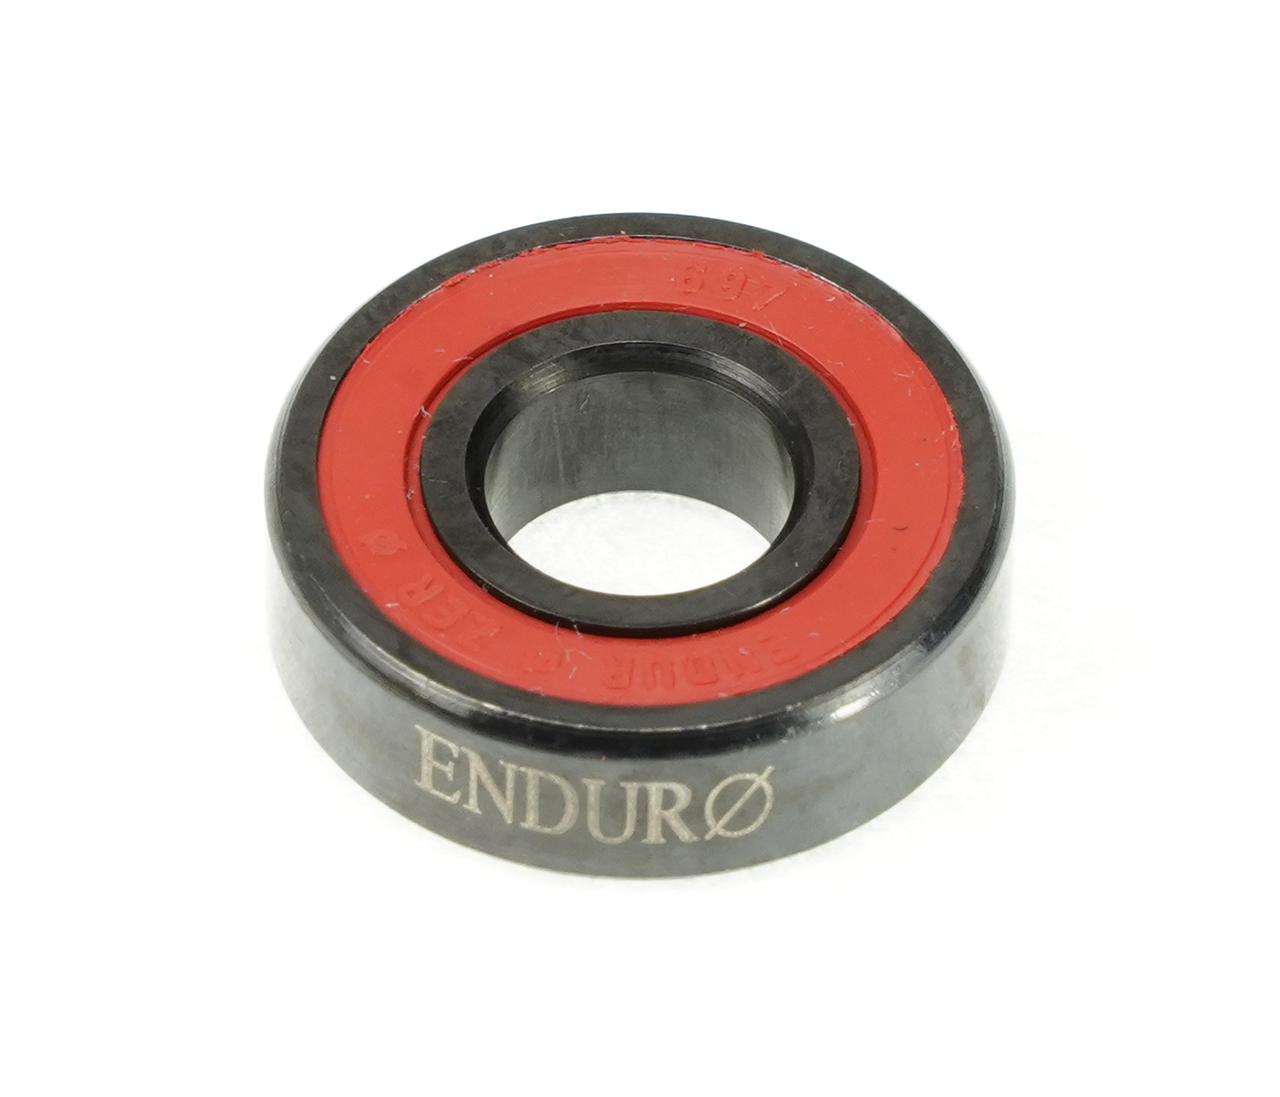 Enduro CO 697 VV - Enduro Zero, Black-Oxide, Ceramic Hybrid, ABEC-5, Radial Bearing (C3 Clearance) - 7mm x 17mm x 5mm